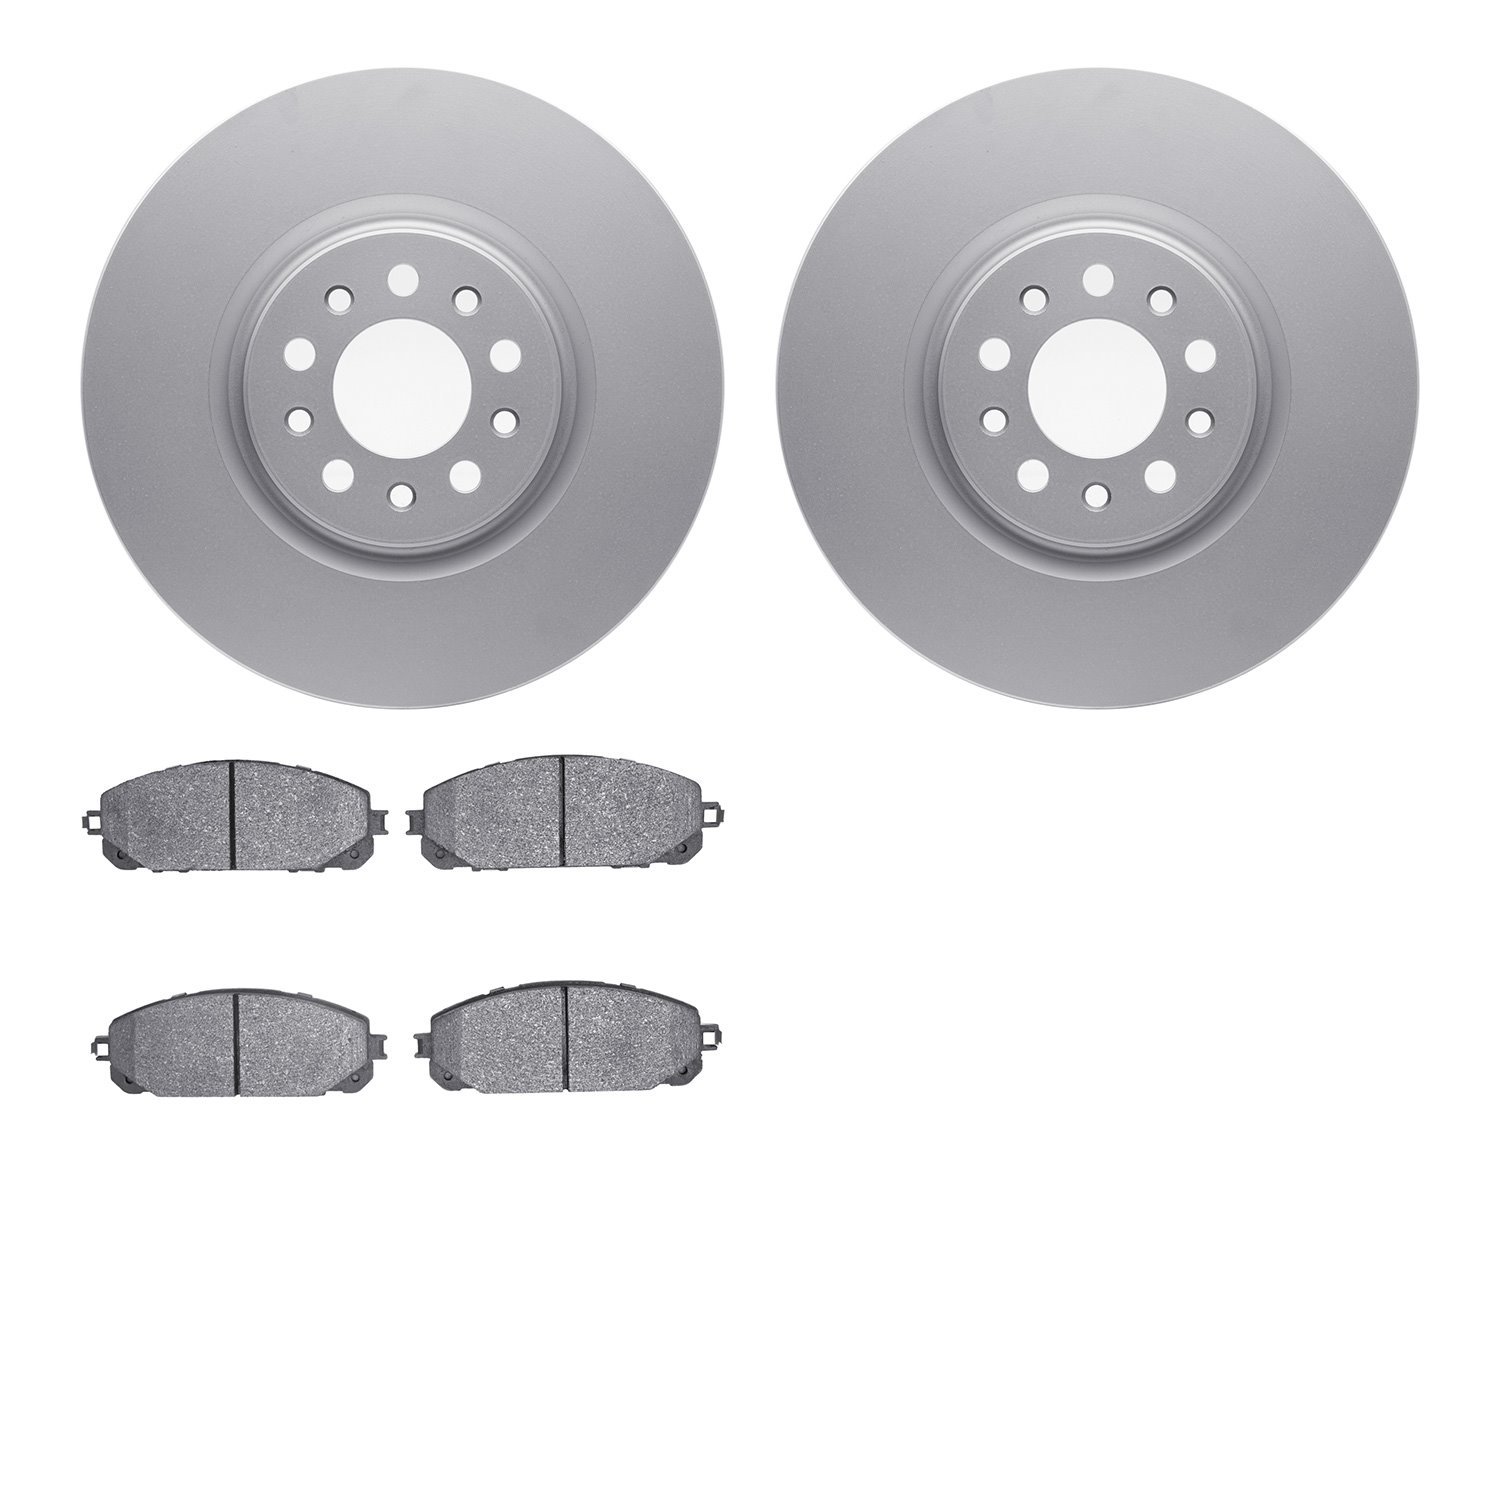 4402-42015 Geospec Brake Rotors with Ultimate-Duty Brake Pads Kit, Fits Select Mopar, Position: Front